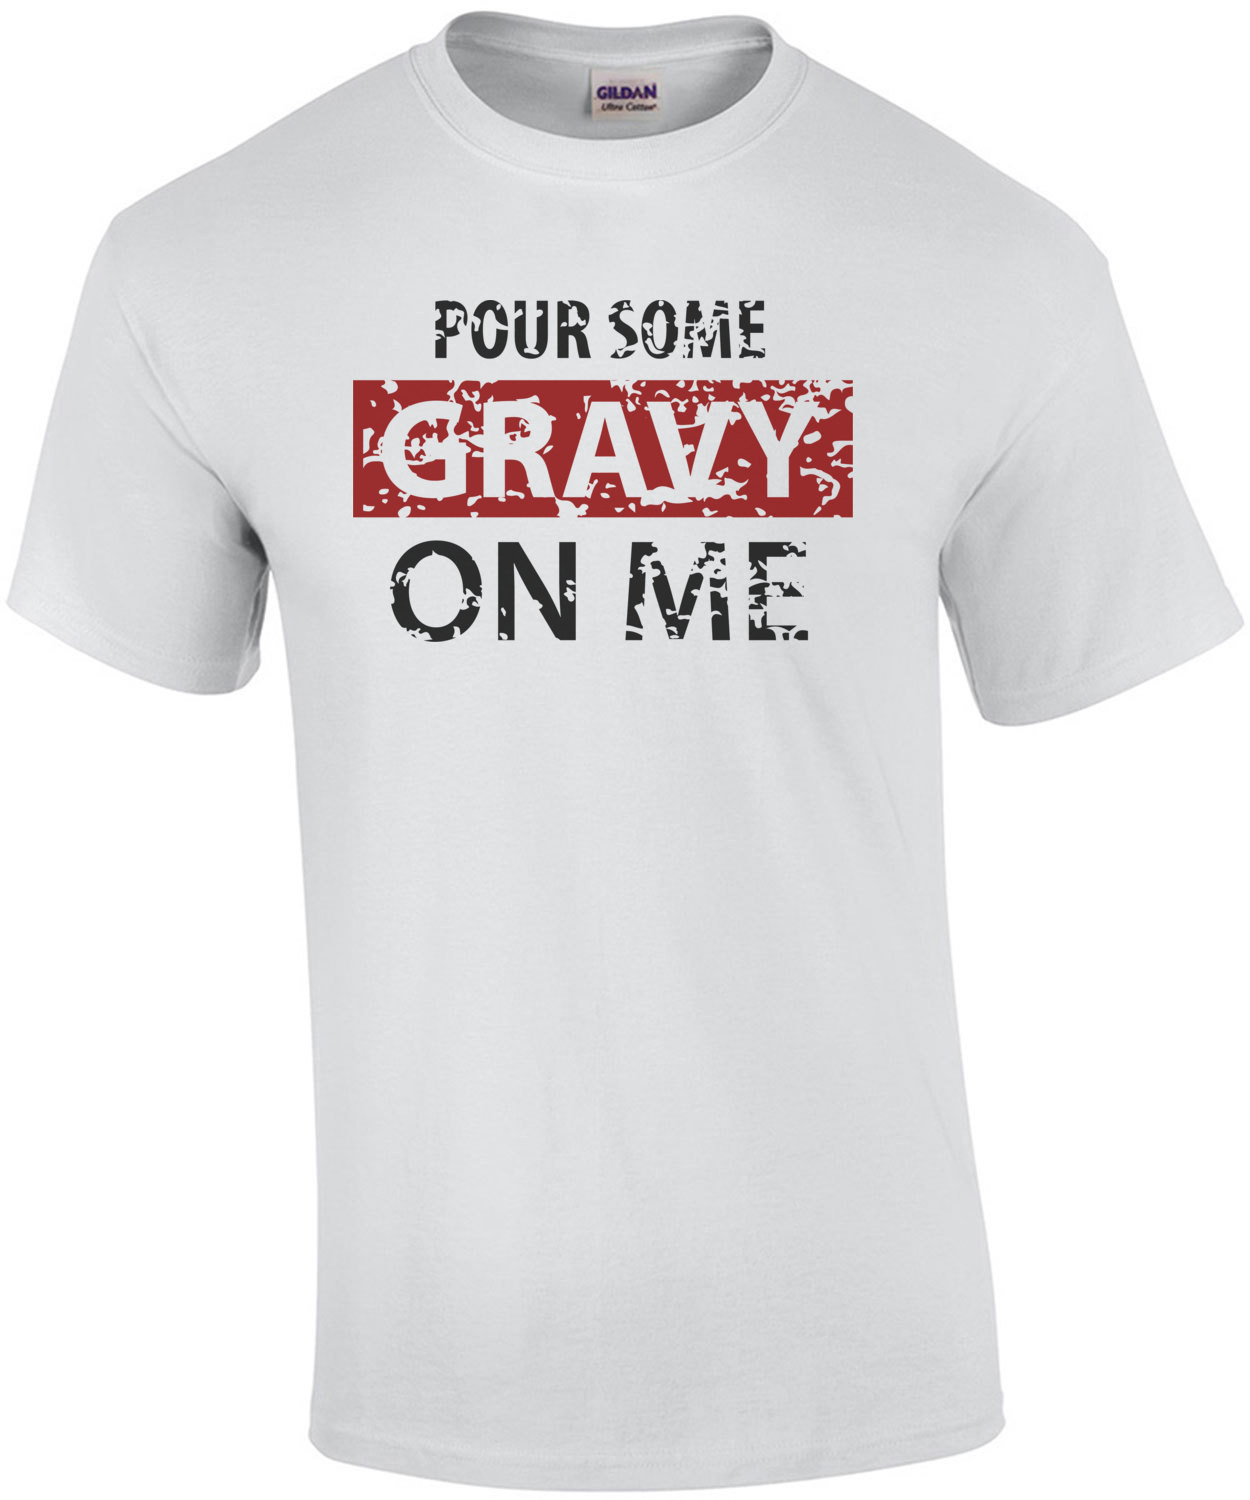 Pour some gravy on me - thanksgiving t-shirt